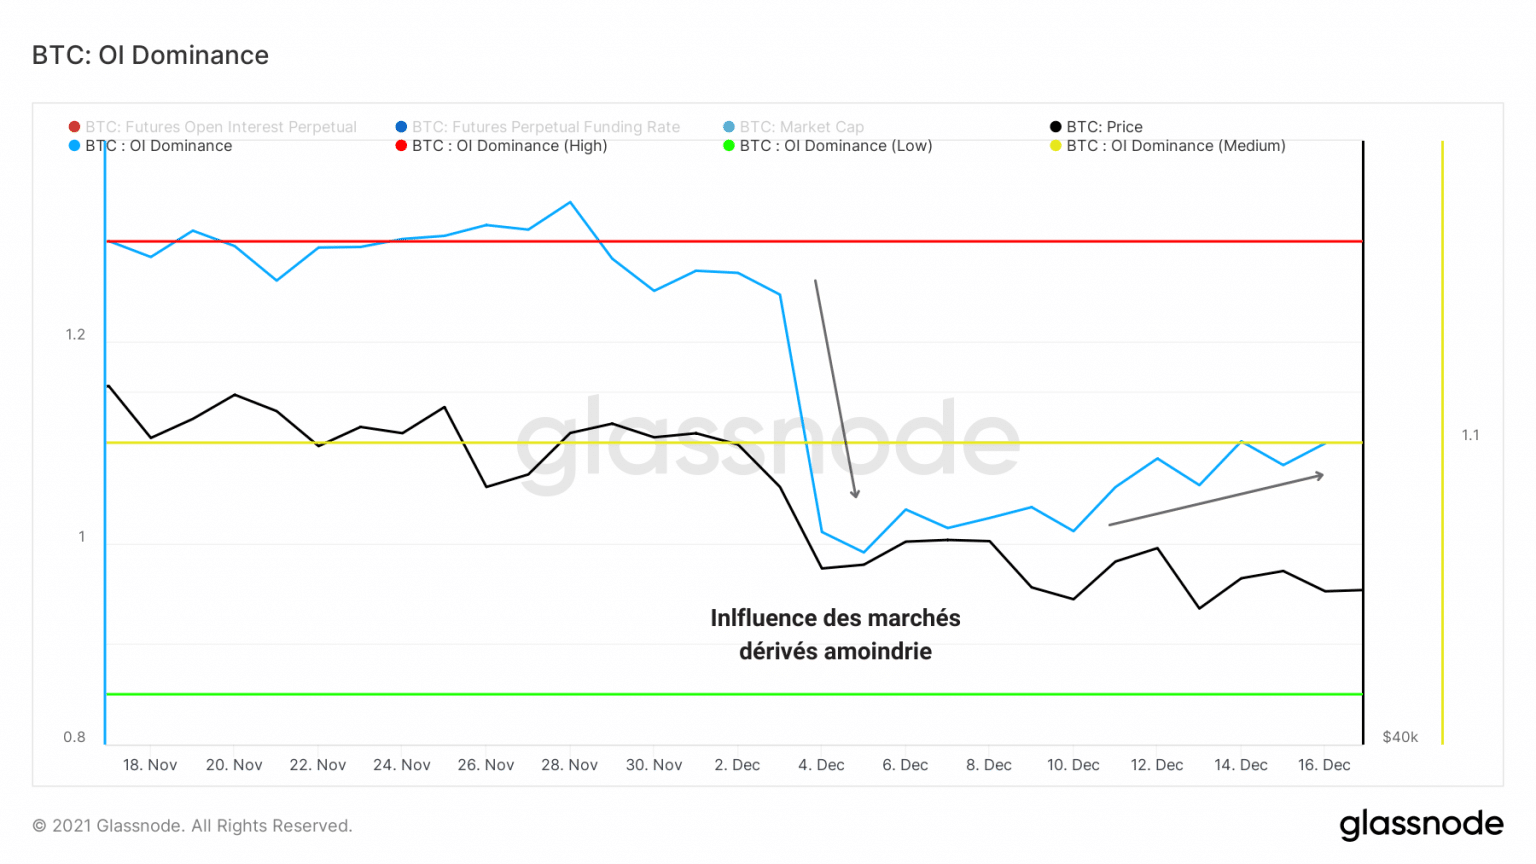 Open interest dominance chart (Fonte: Glassnode)